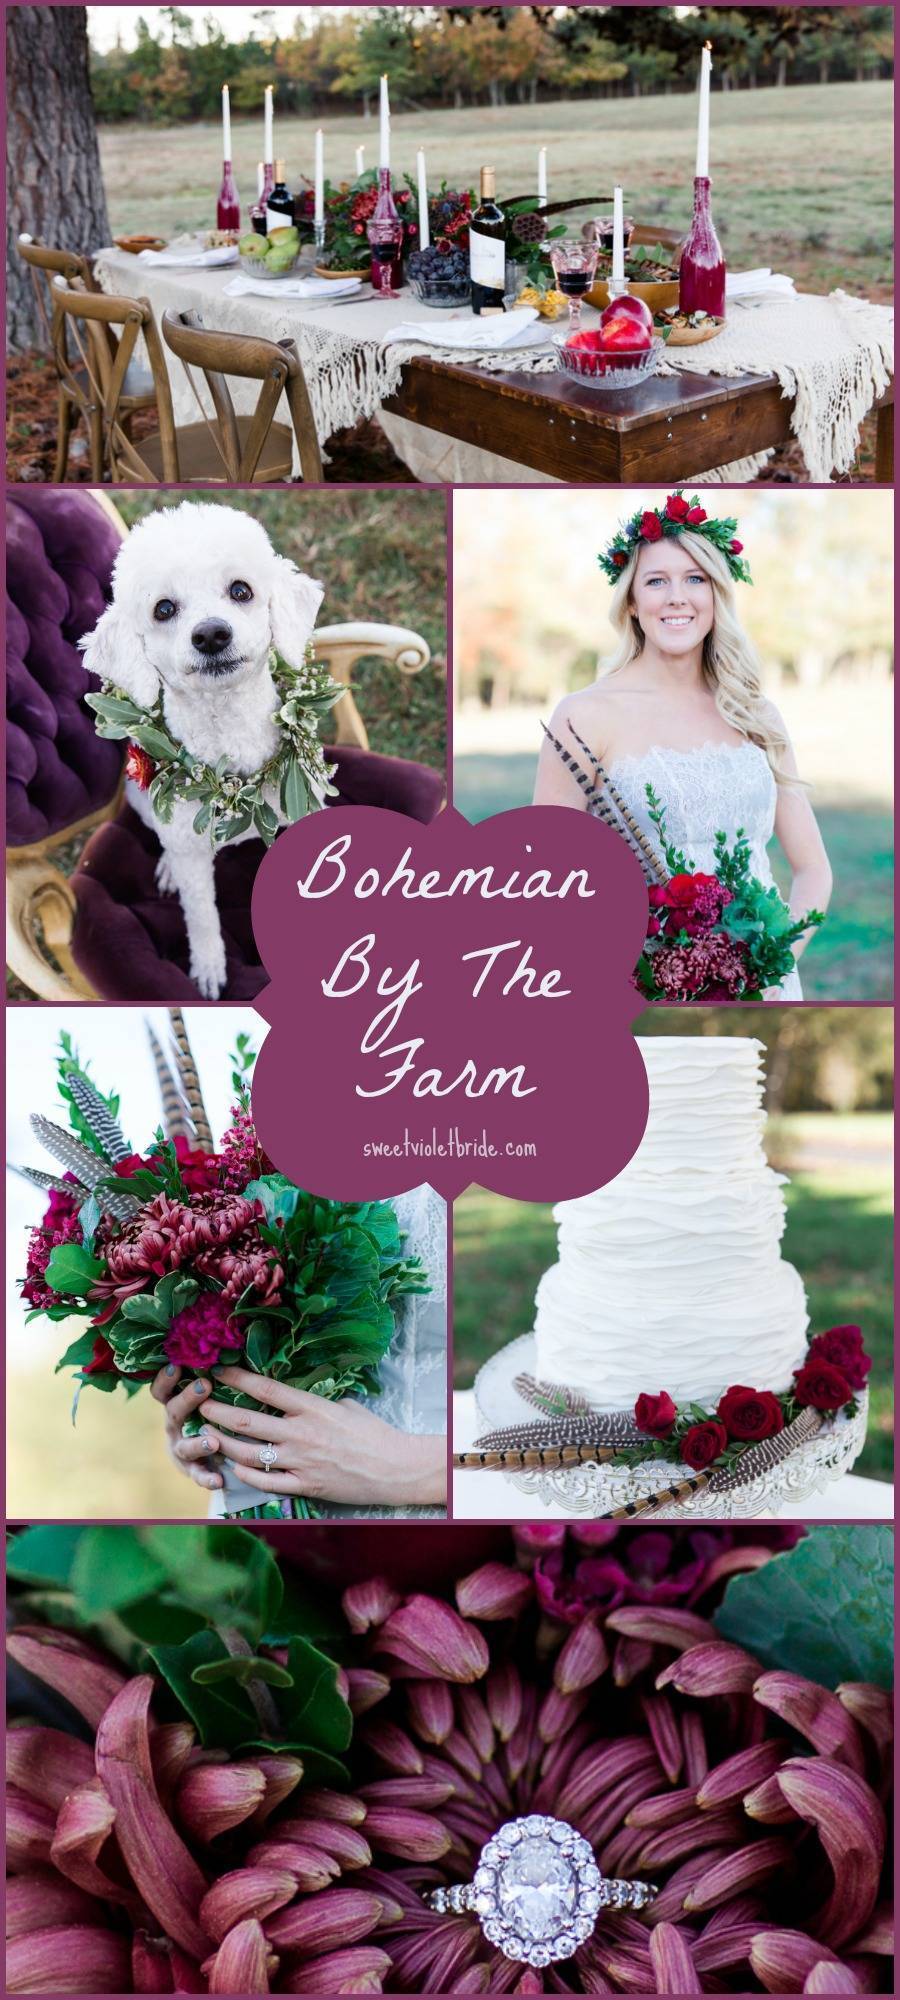 Bohemian By The Farm 141